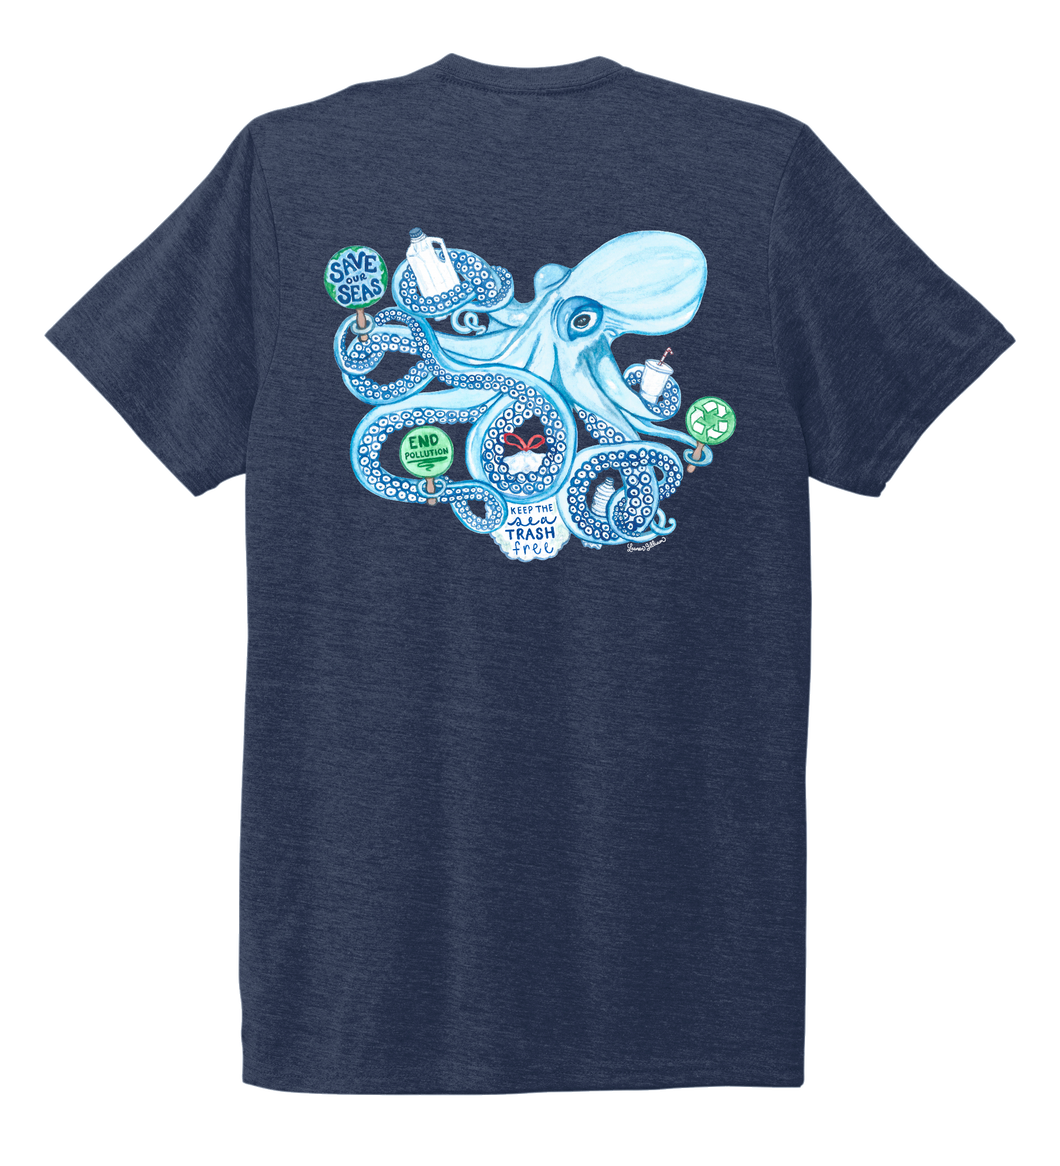 Lauren Gilliam, Octopus, Unisex Crew Neck T-shirt in Deep Sea Blue